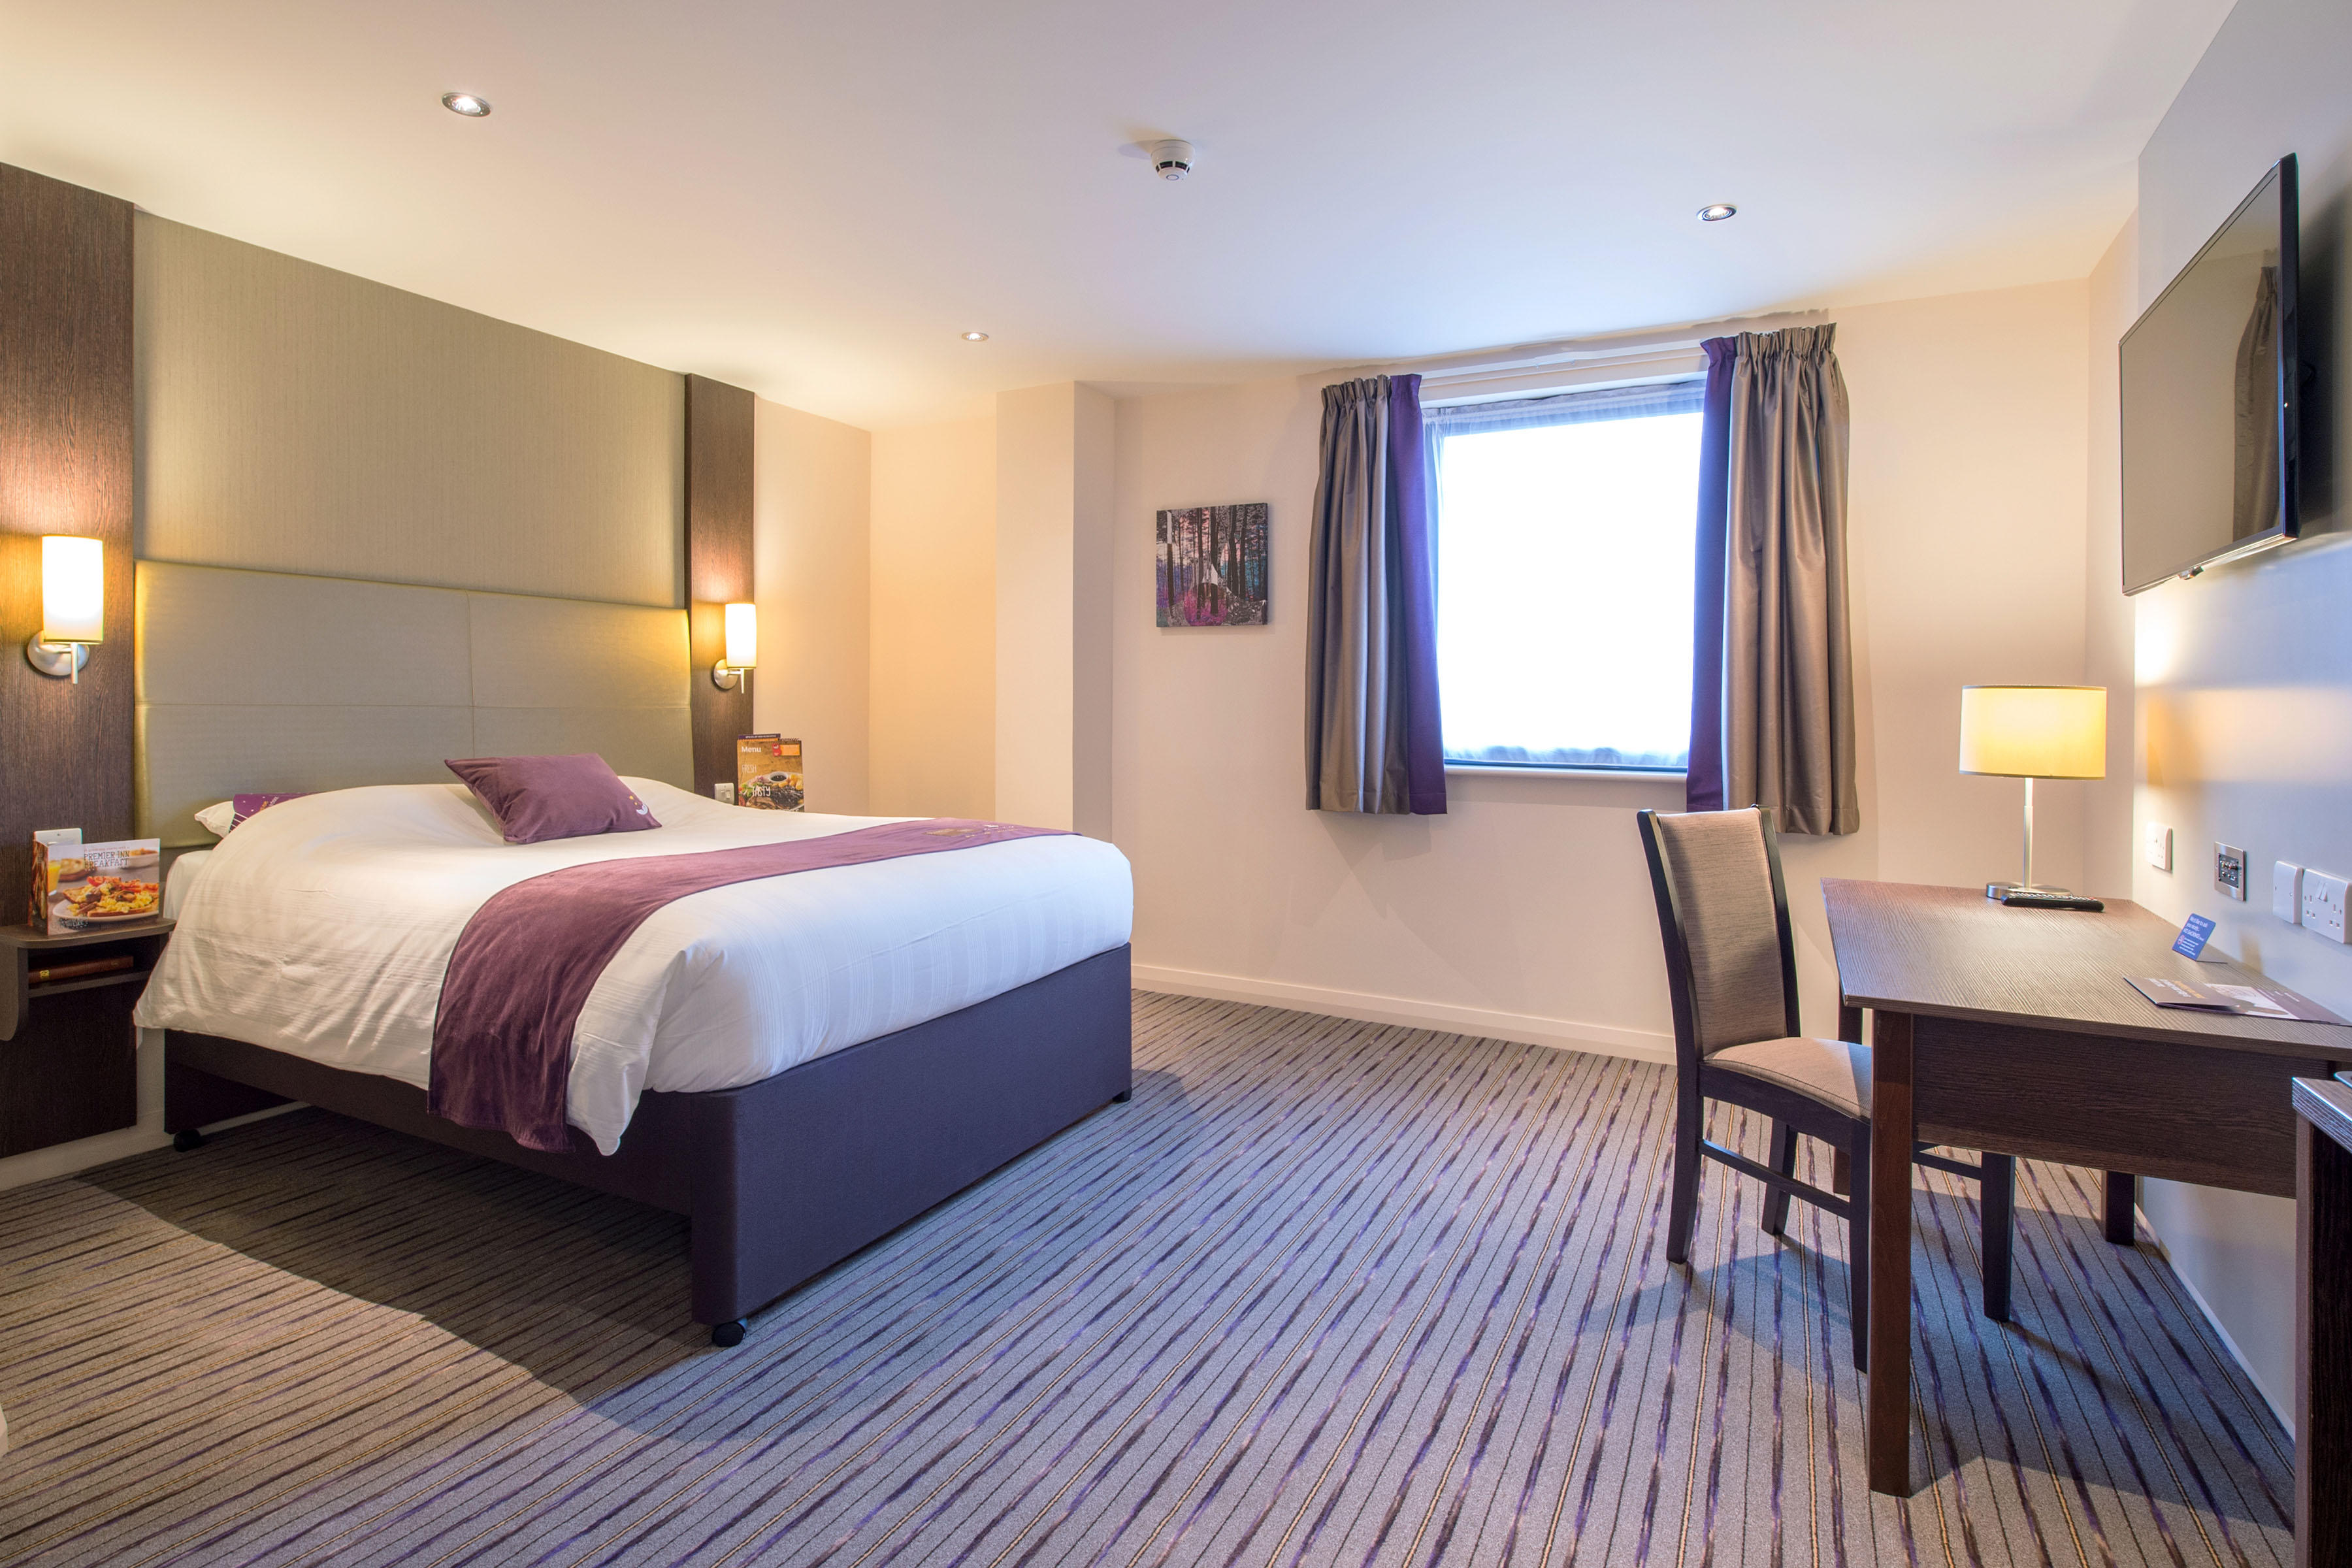 Premier Inn bedroom Premier Inn London Bexleyheath hotel Bexleyheath 03333 219372